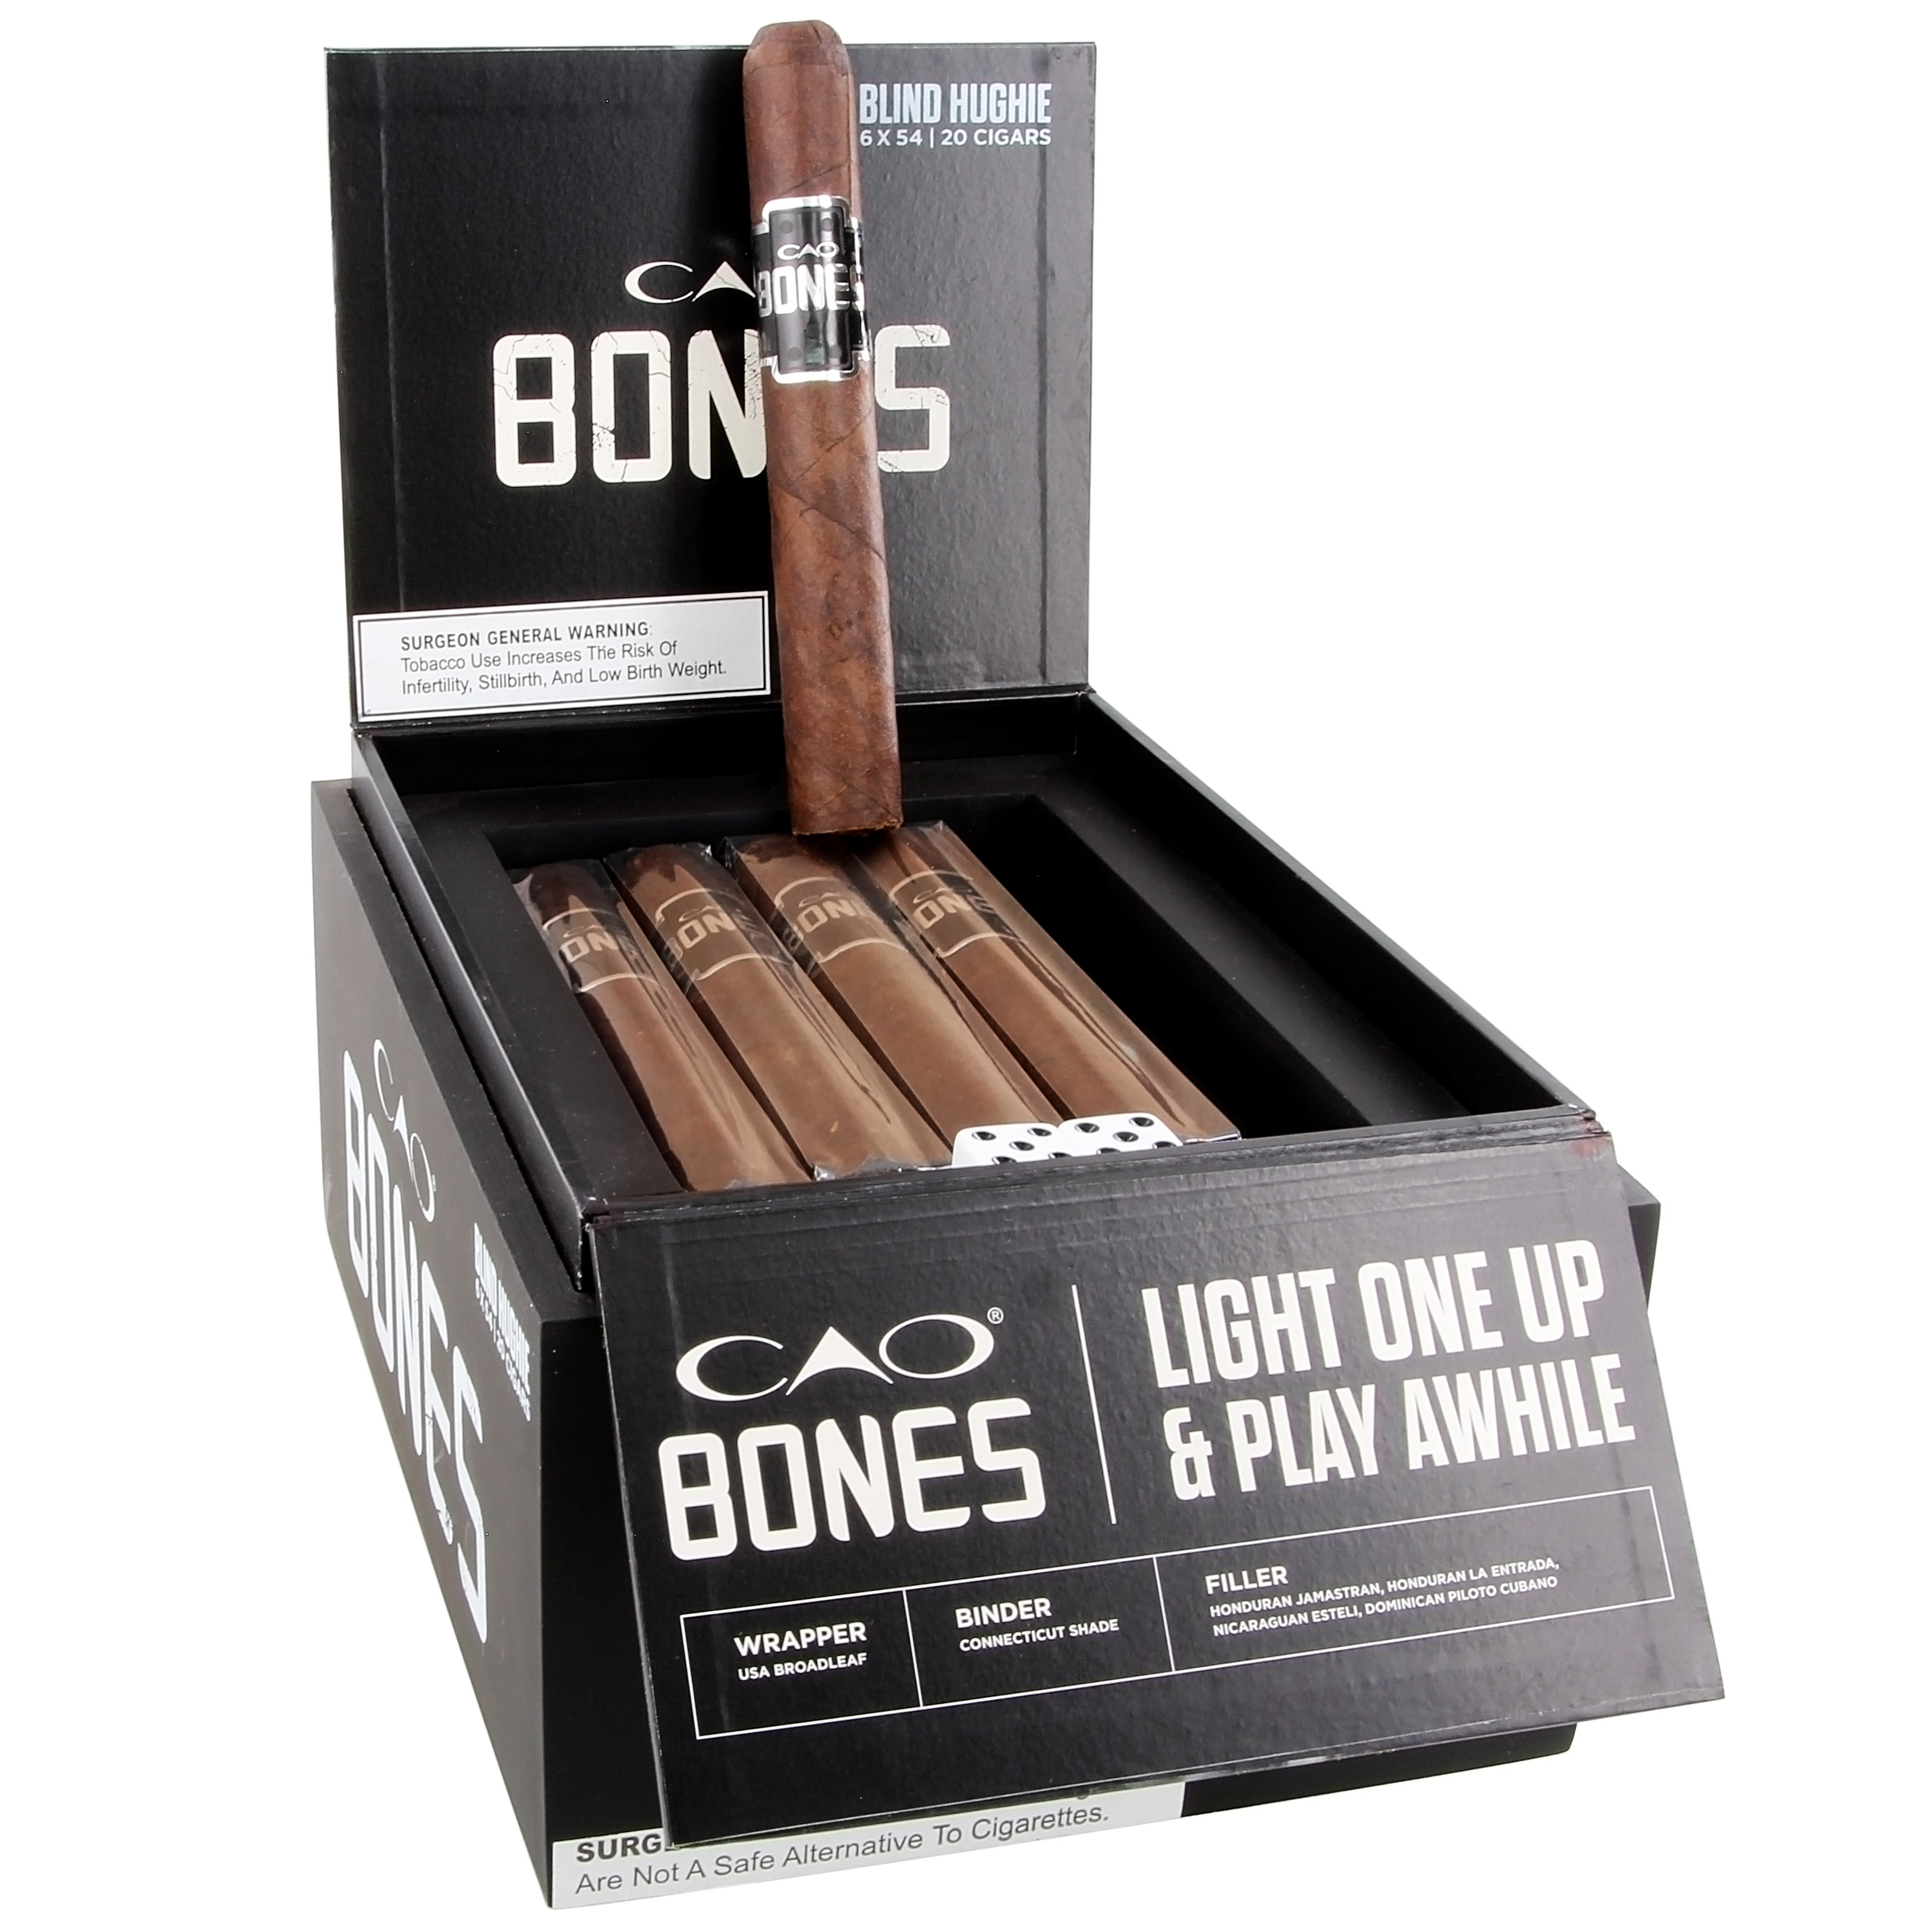 cao bones cigars